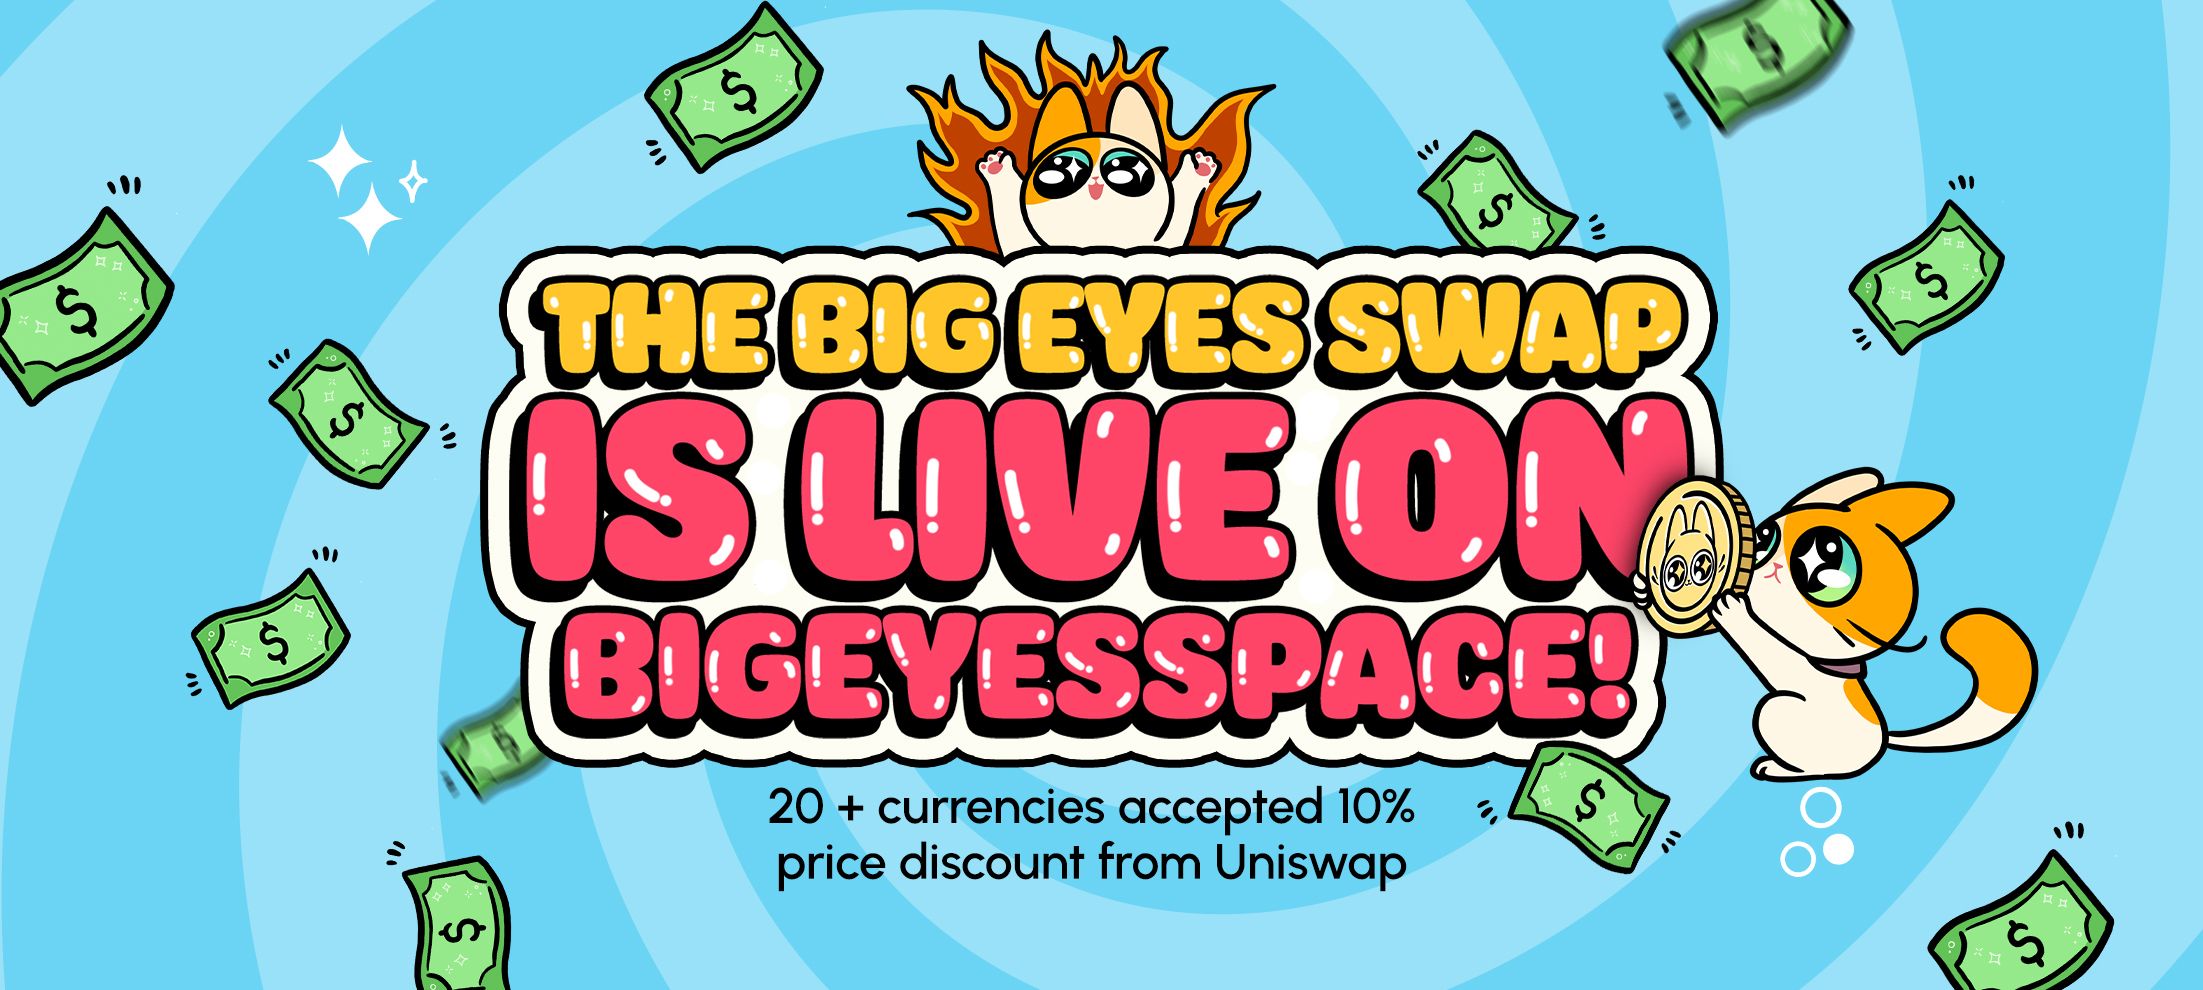 Big Eyes - Web3 Casino + P2E + 10 Exchanges Launching!